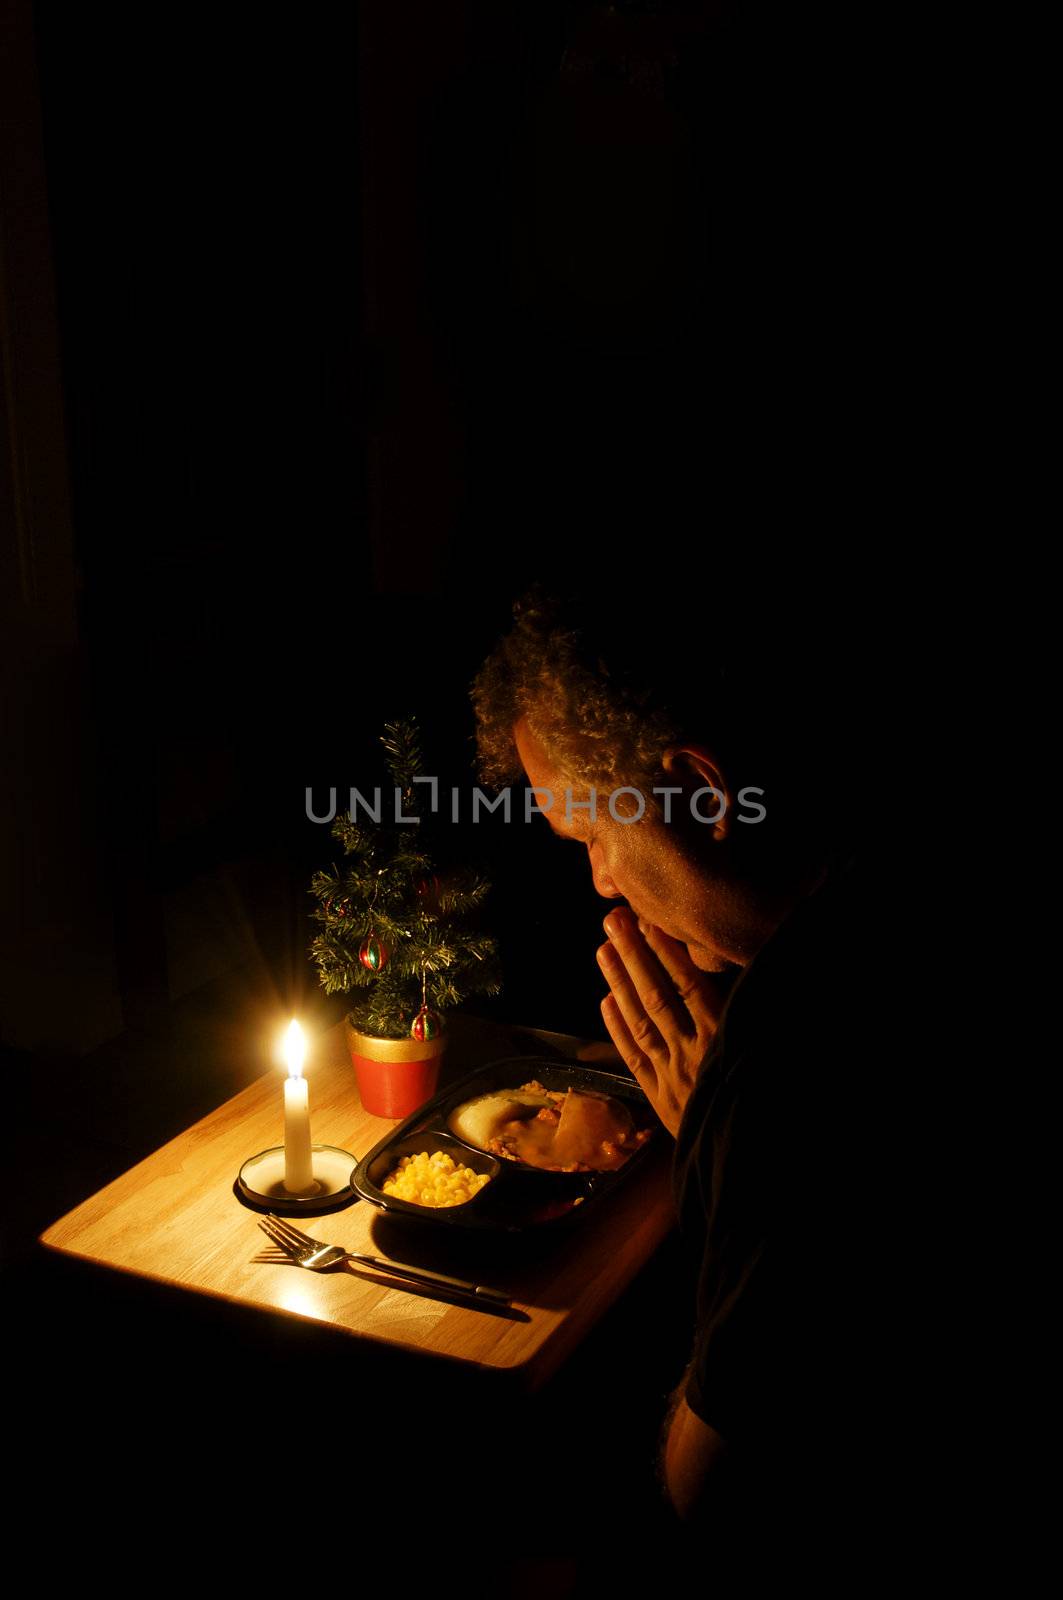 Praying over TV Dinner by wayneandrose